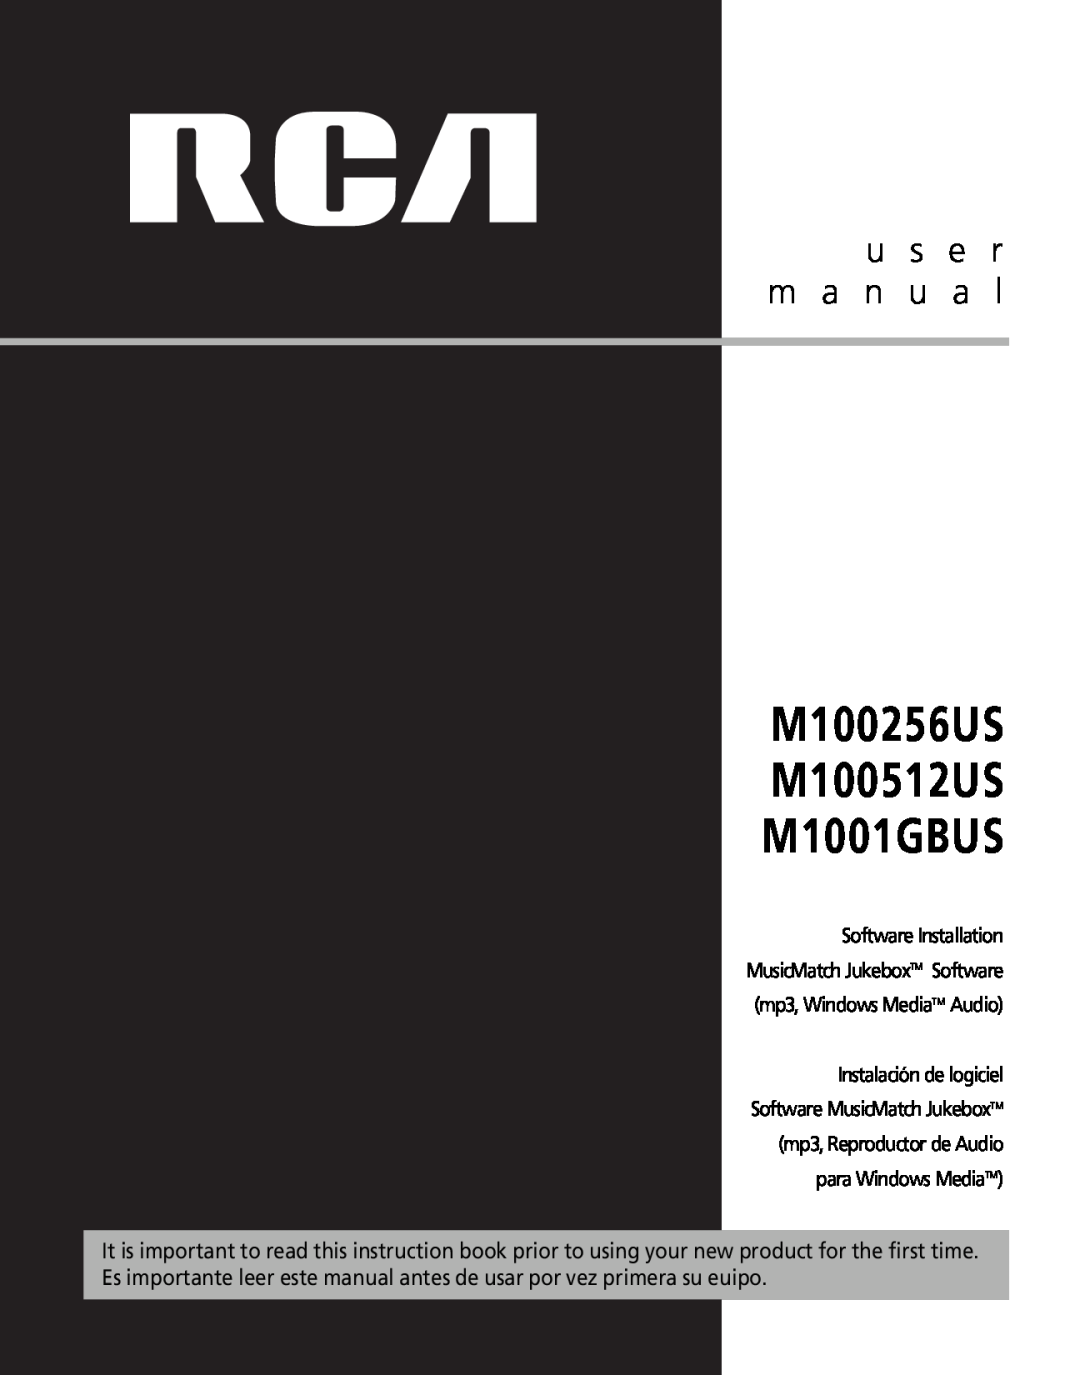 RCA user manual M100256US M100512US M1001GBUS, u s e r m a n u a l, Software Installation MusicMatch JukeboxTM Software 